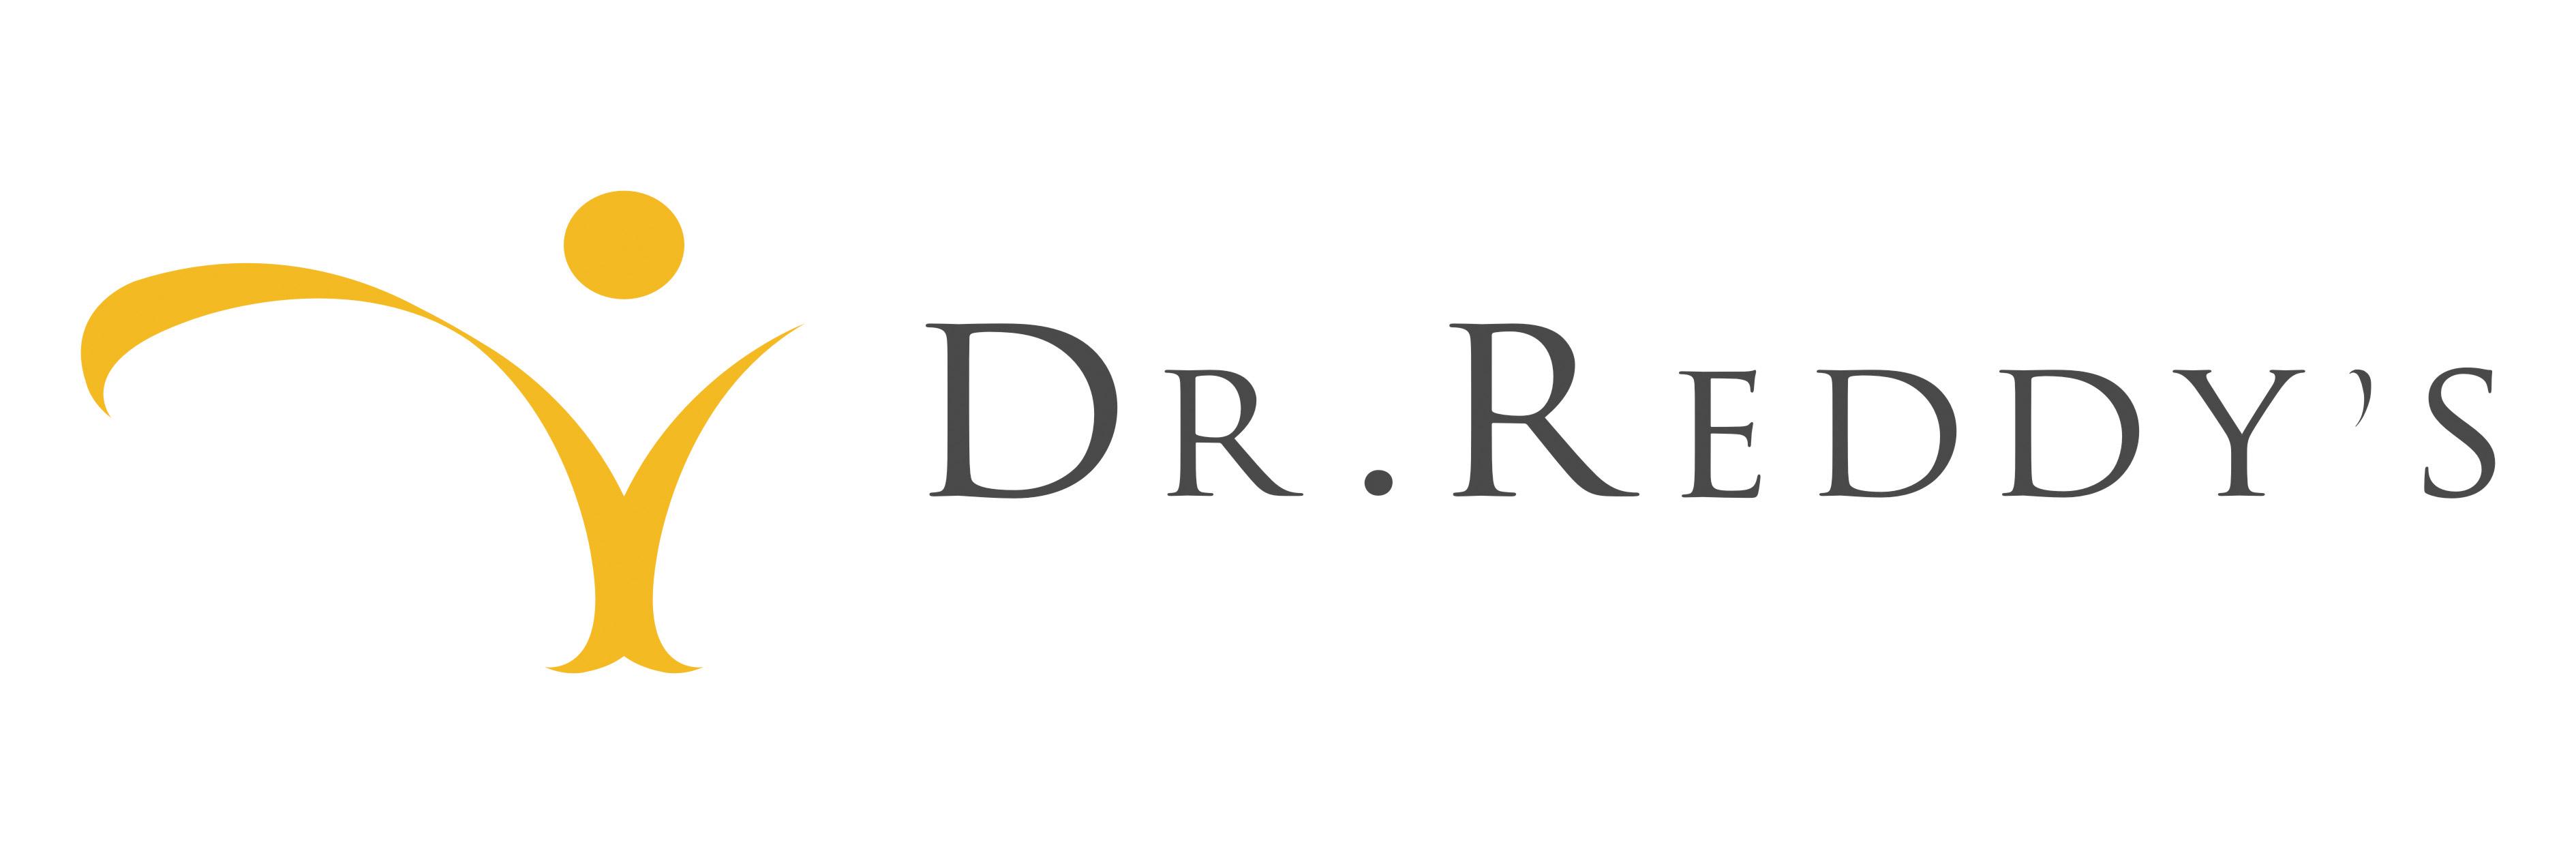 dr.reddy logo